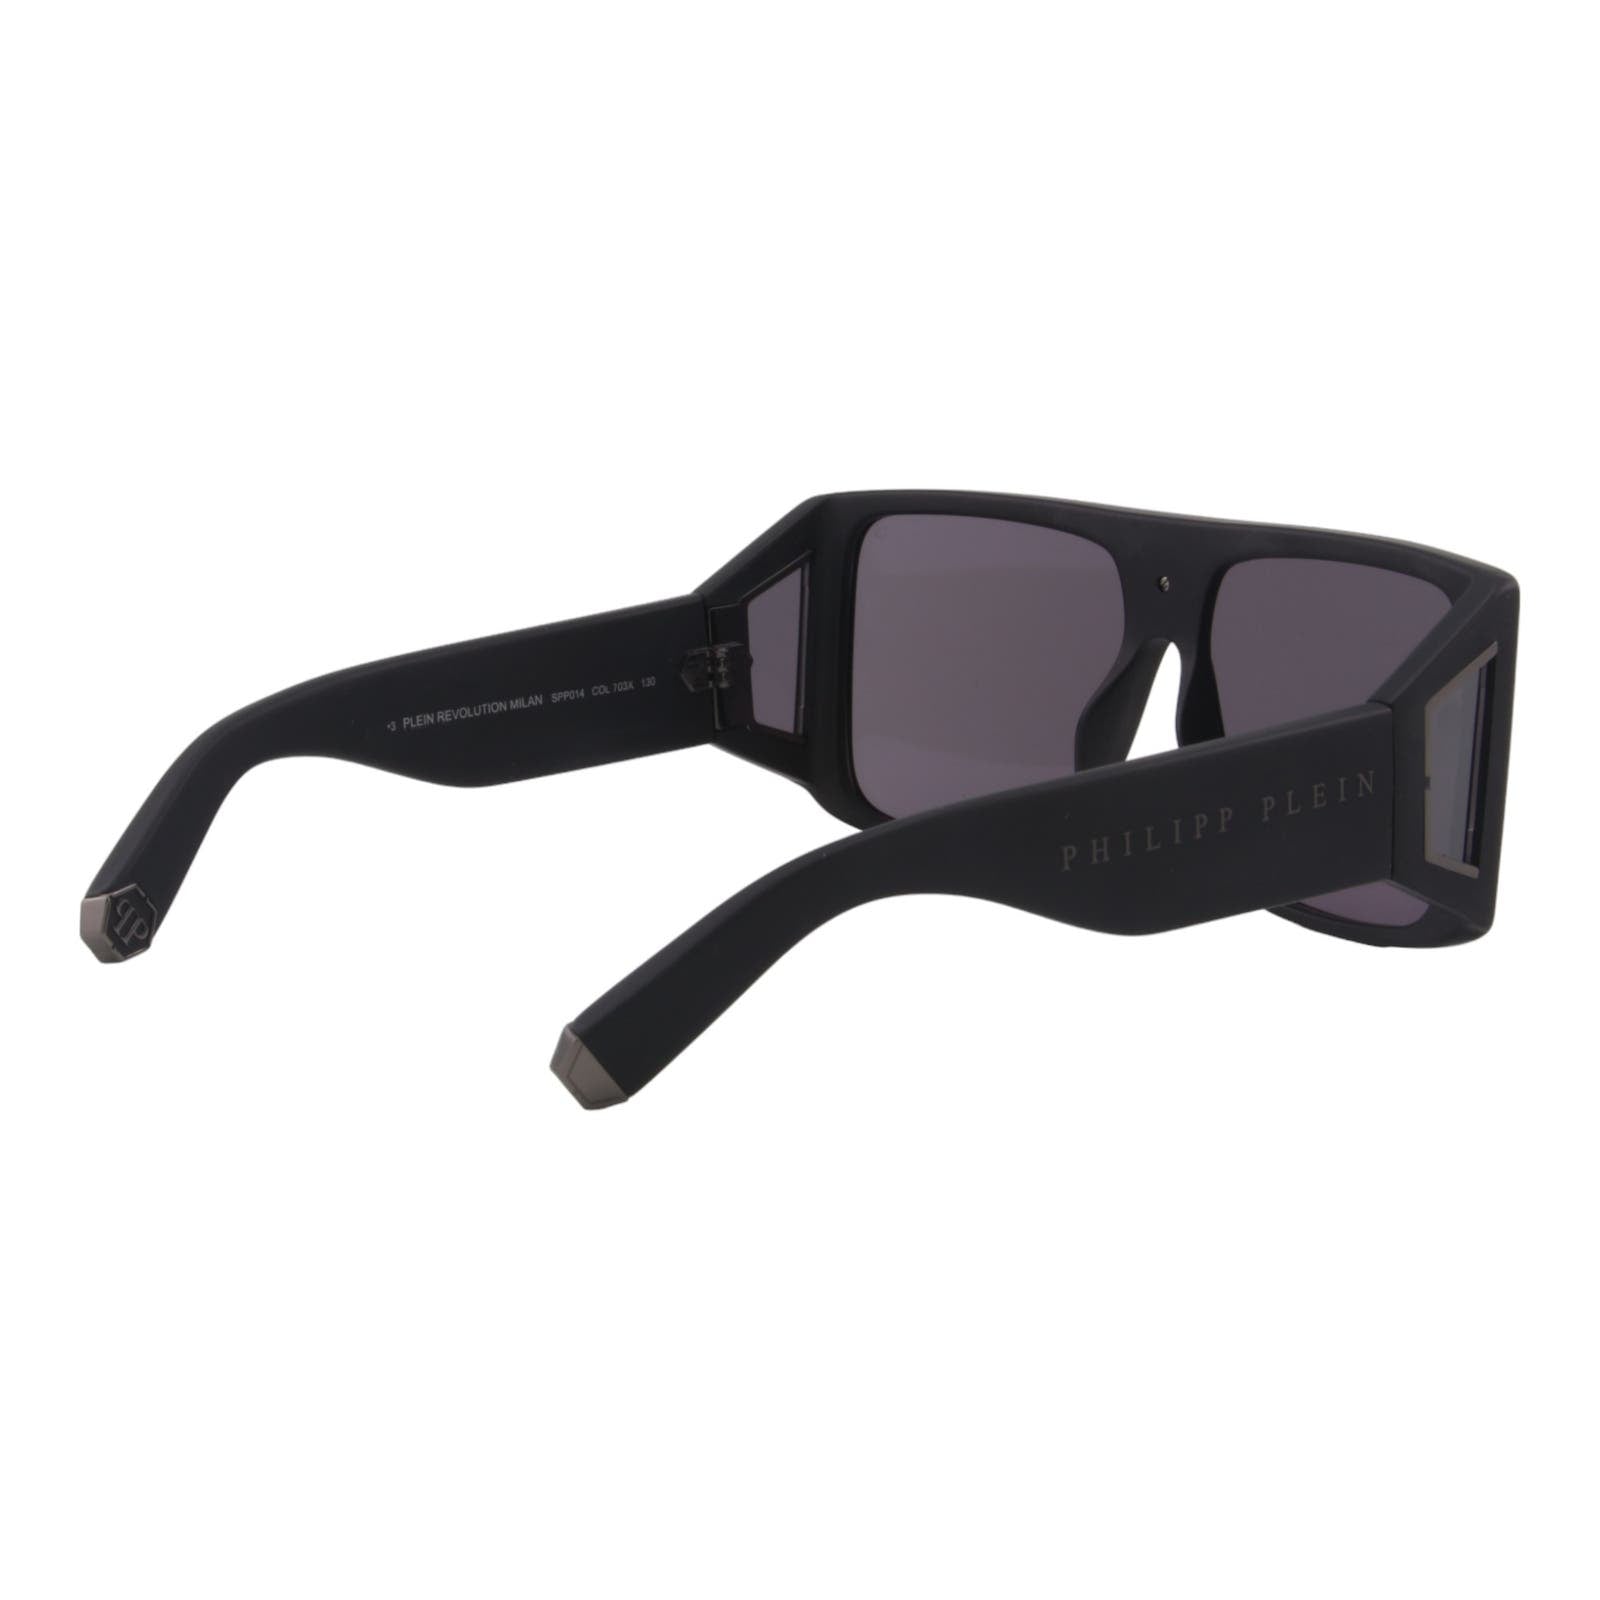 Men Rectangular Sunglasses SPP014M-703X Black & Silver Shield